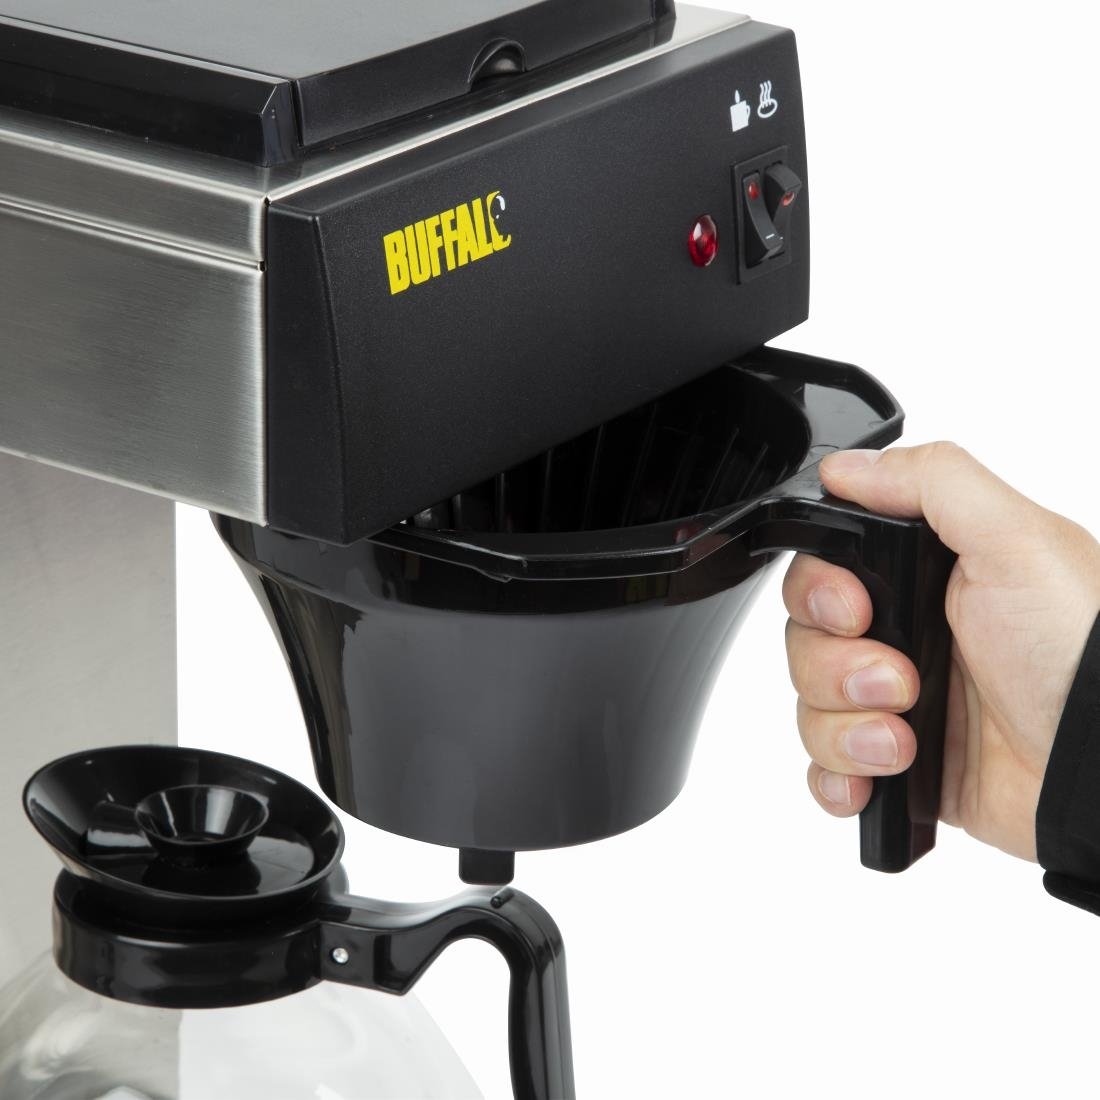 CT815 Buffalo Manual Fill Filter Coffee Machine JD Catering Equipment Solutions Ltd